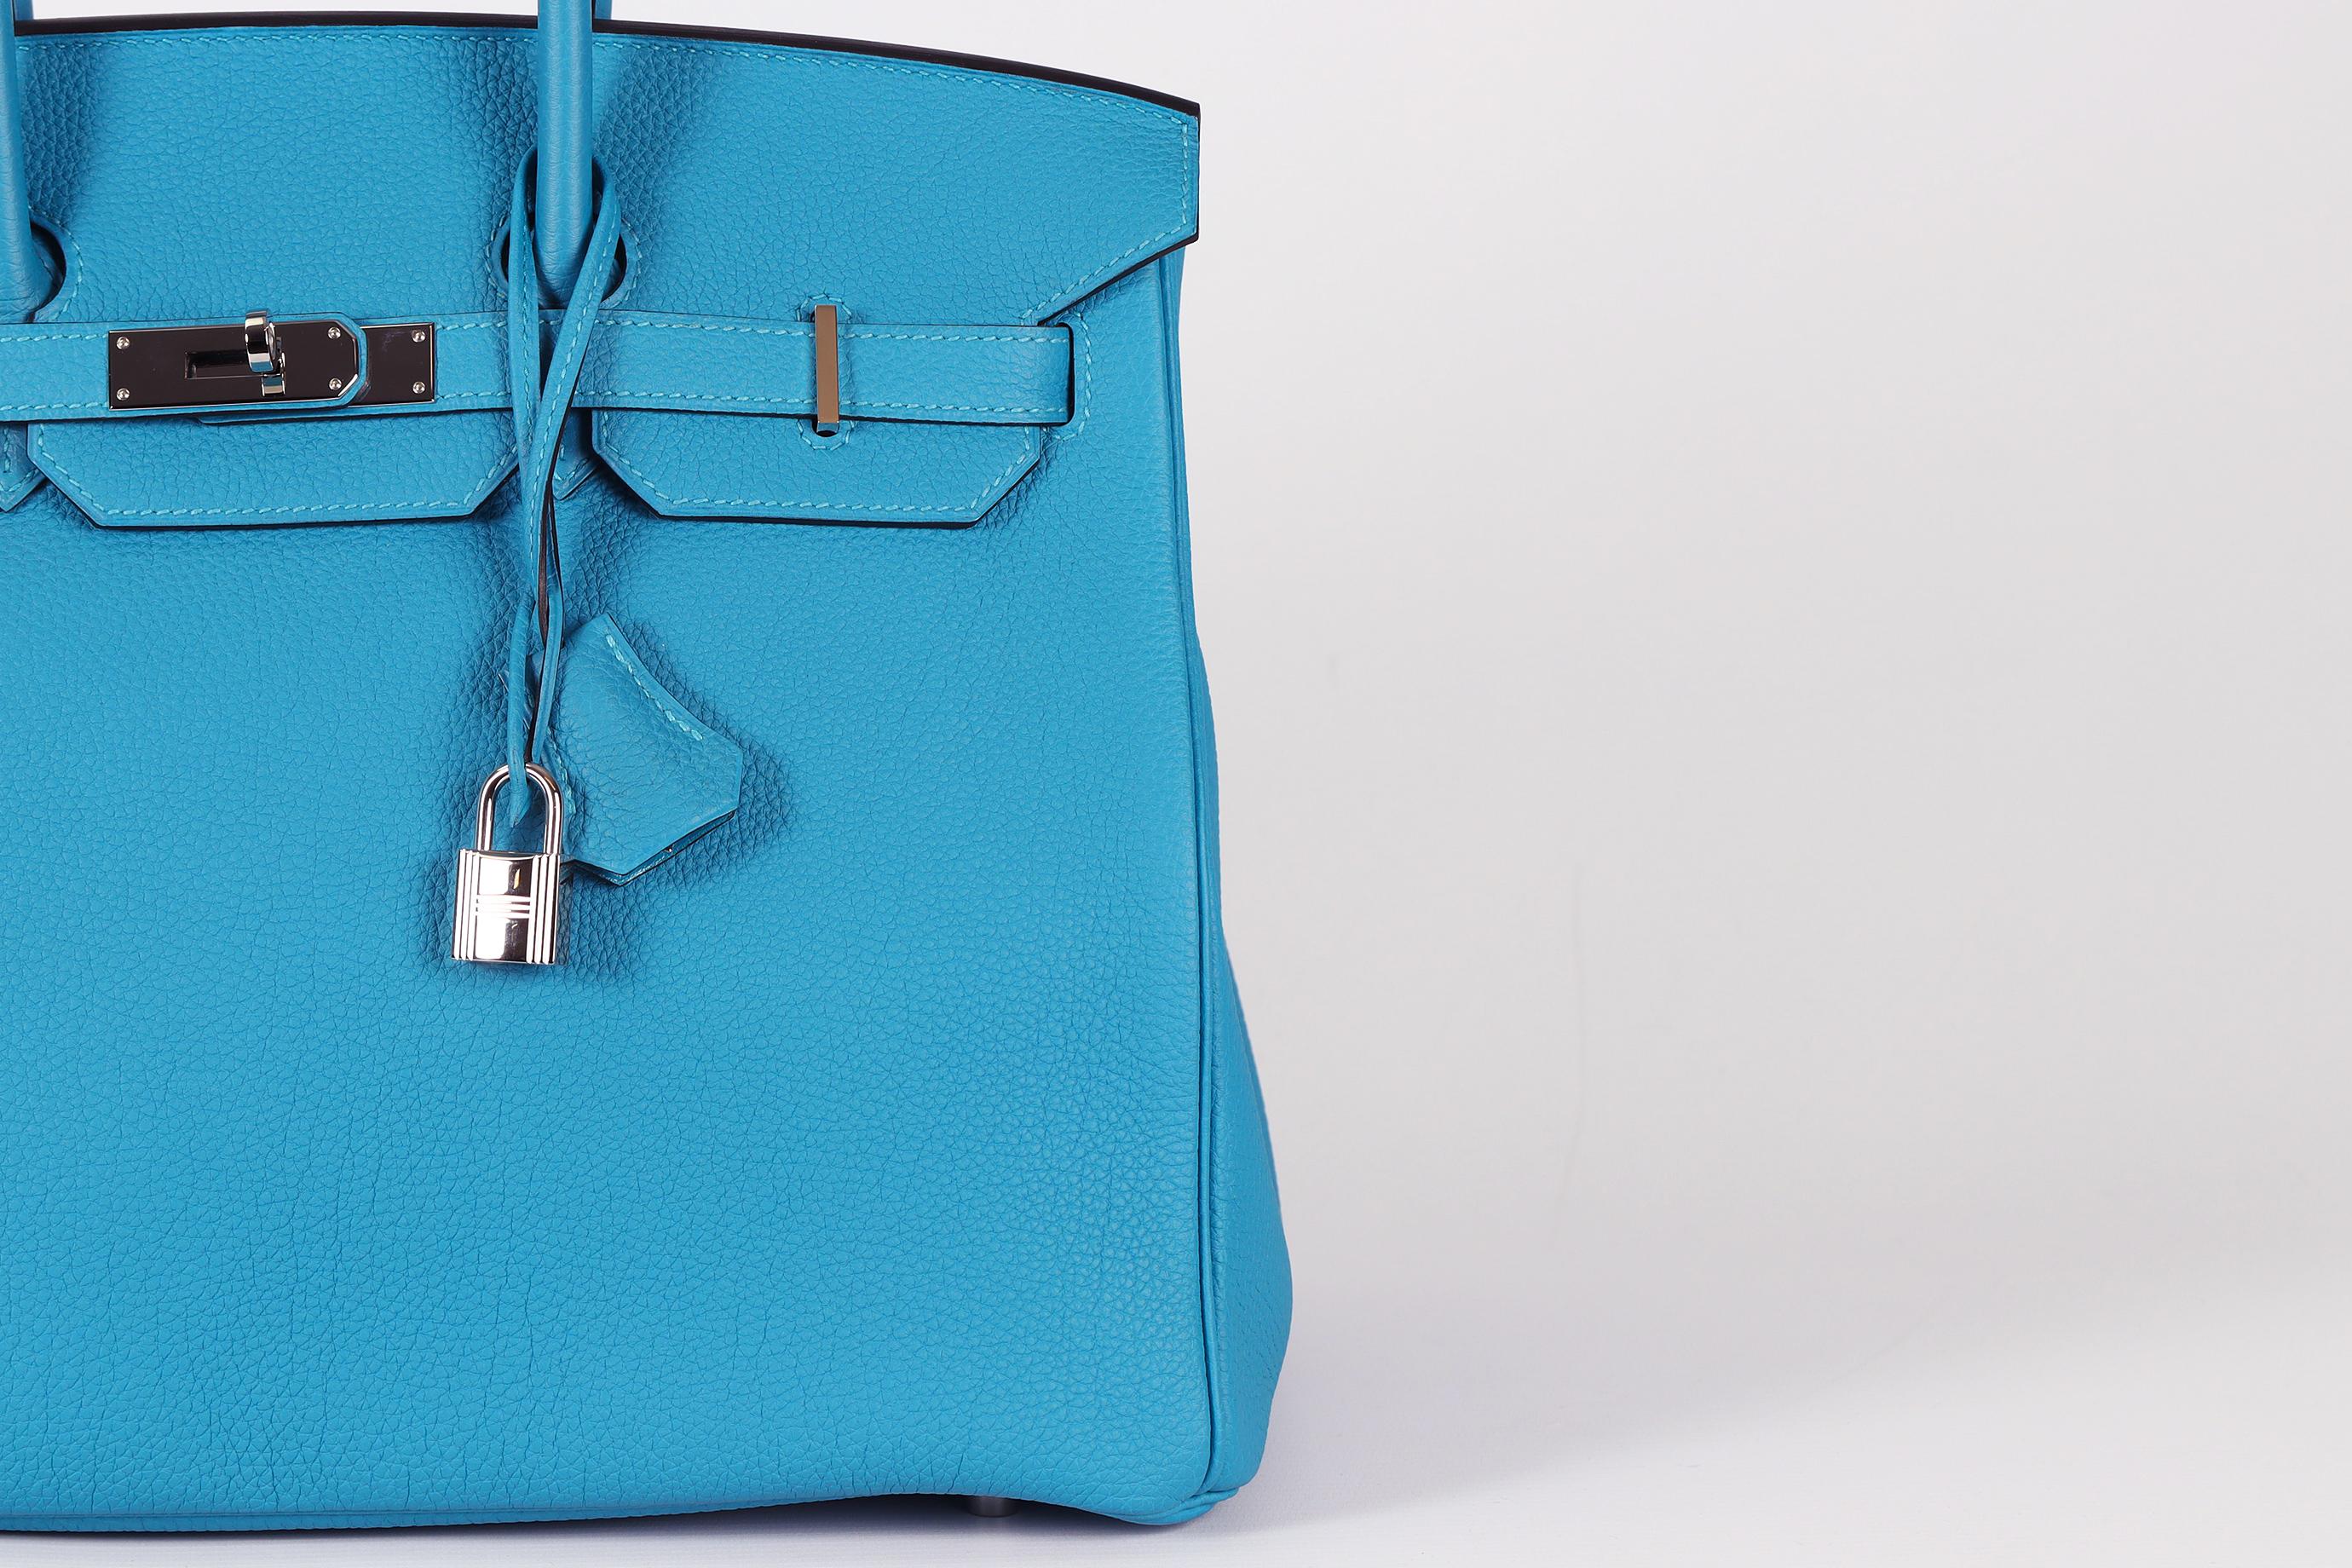 Hermès 2014 Birkin 35cm Togo Leather Bag For Sale 9